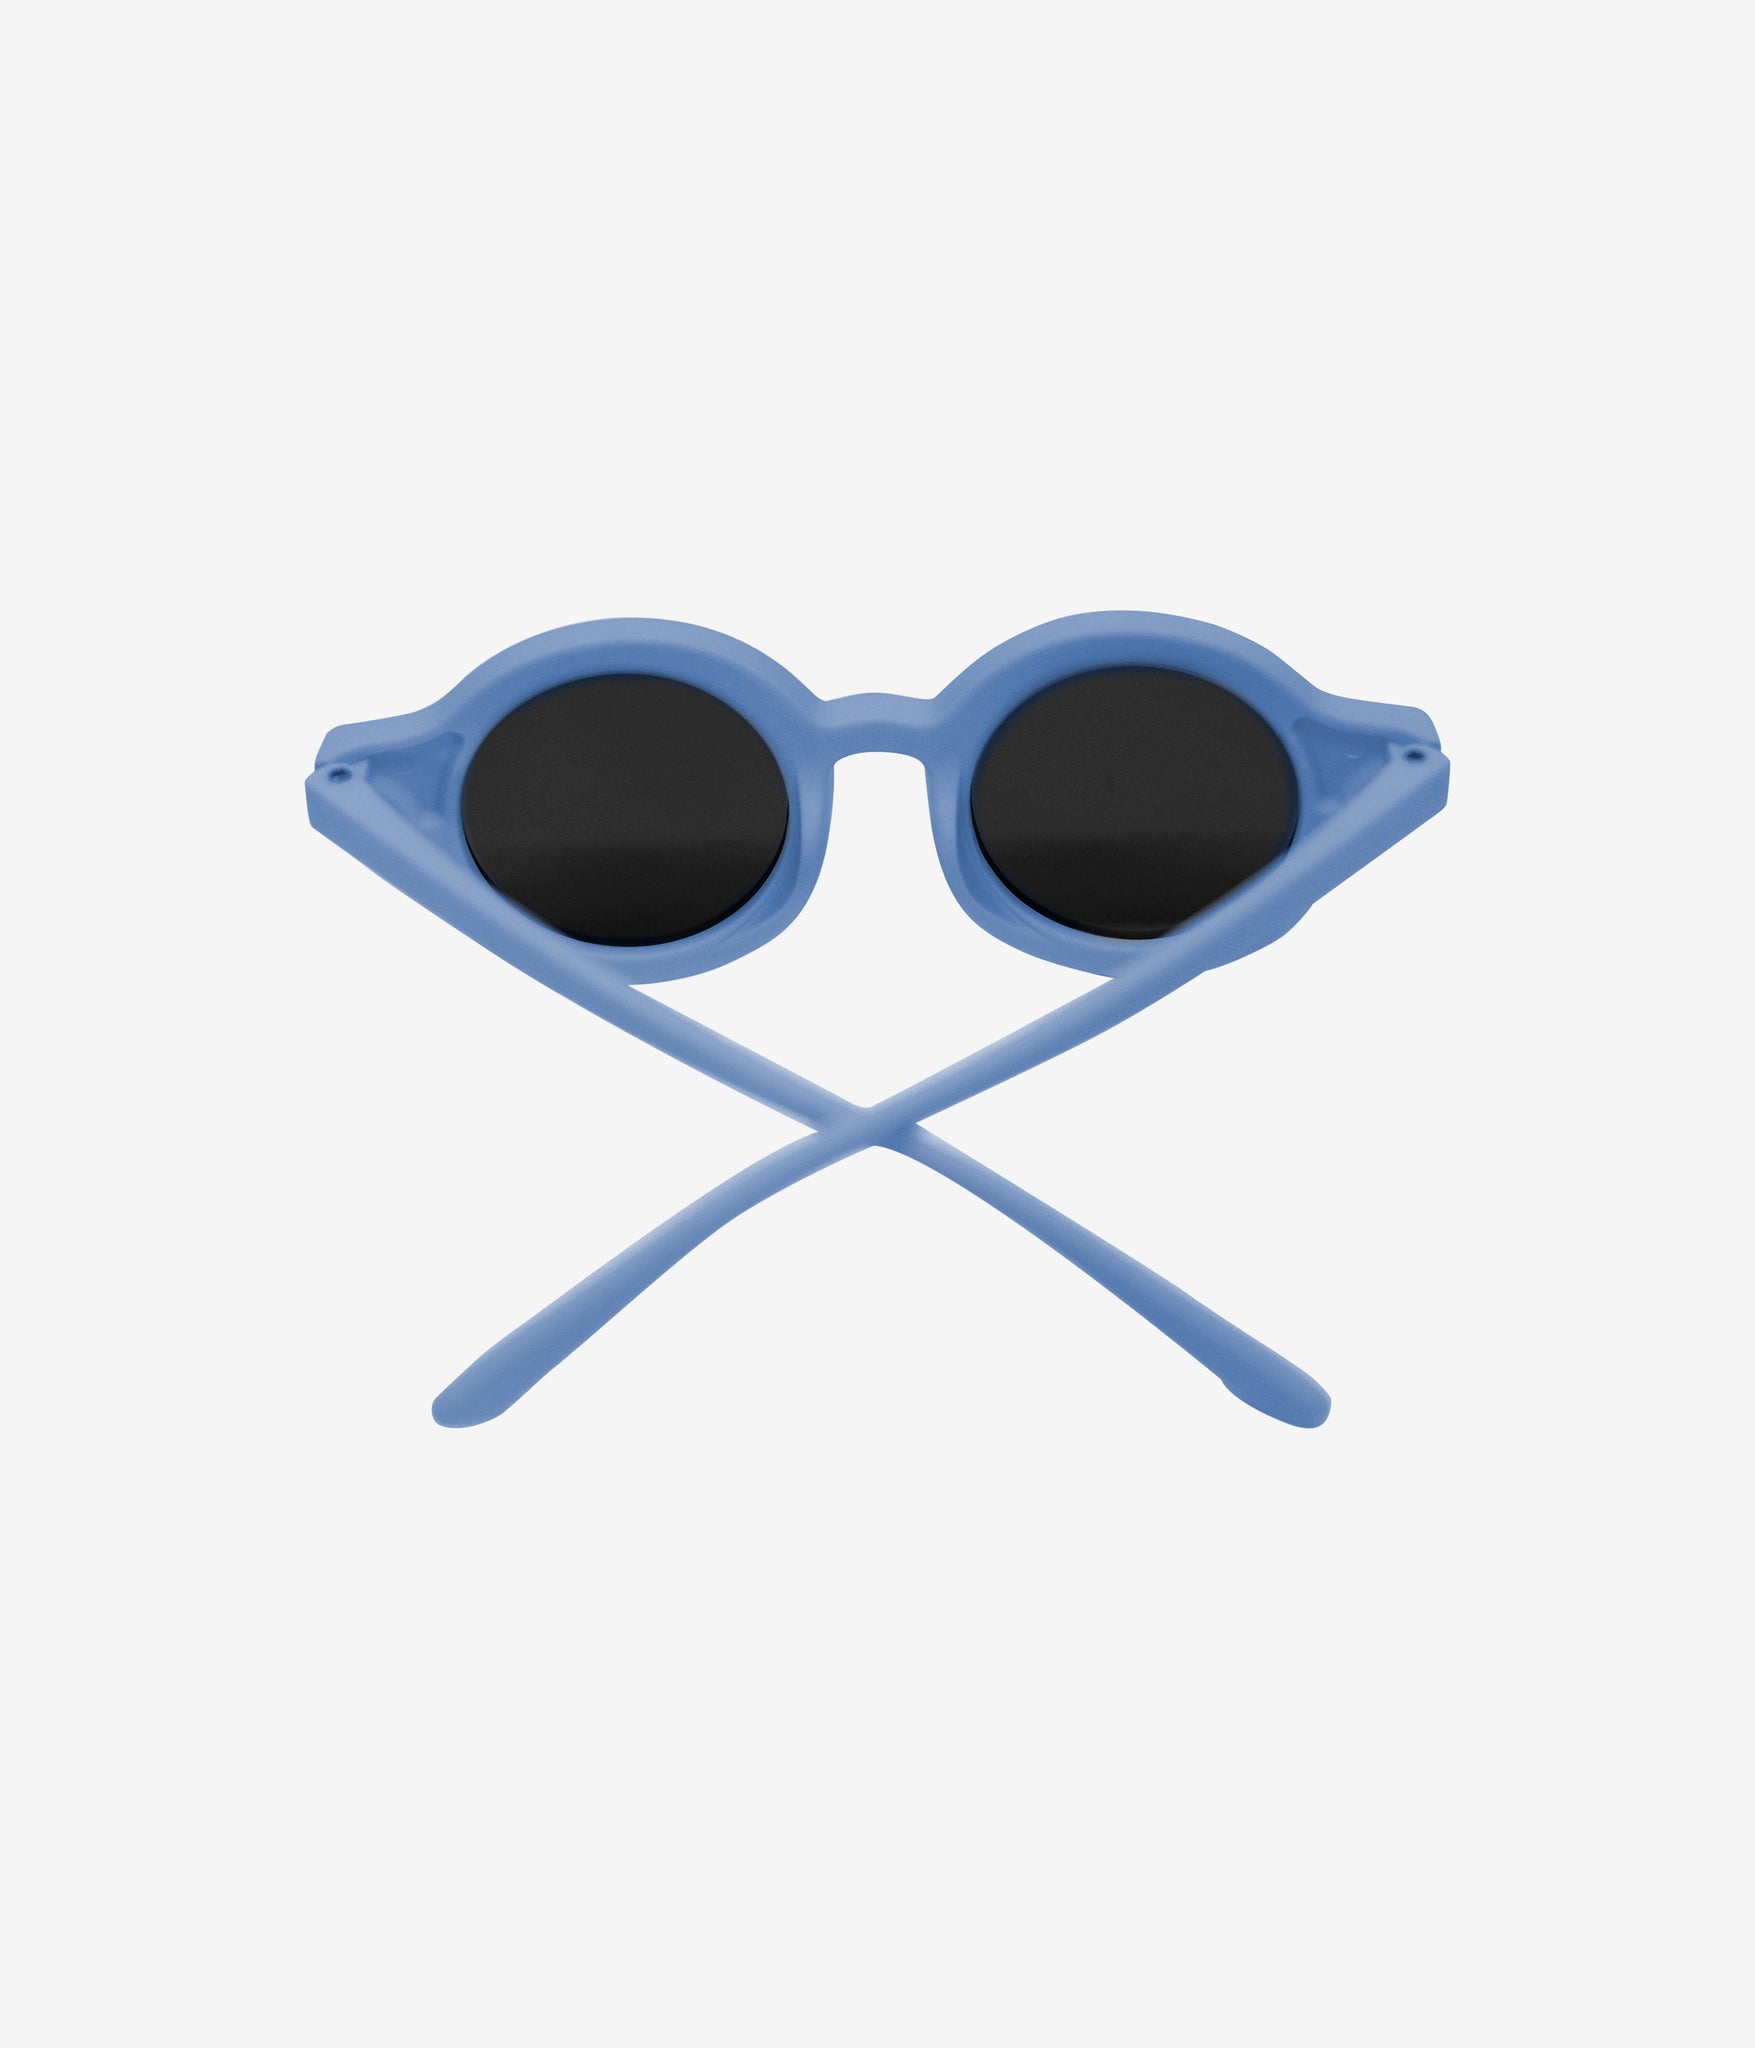 Round sunglasses - blue